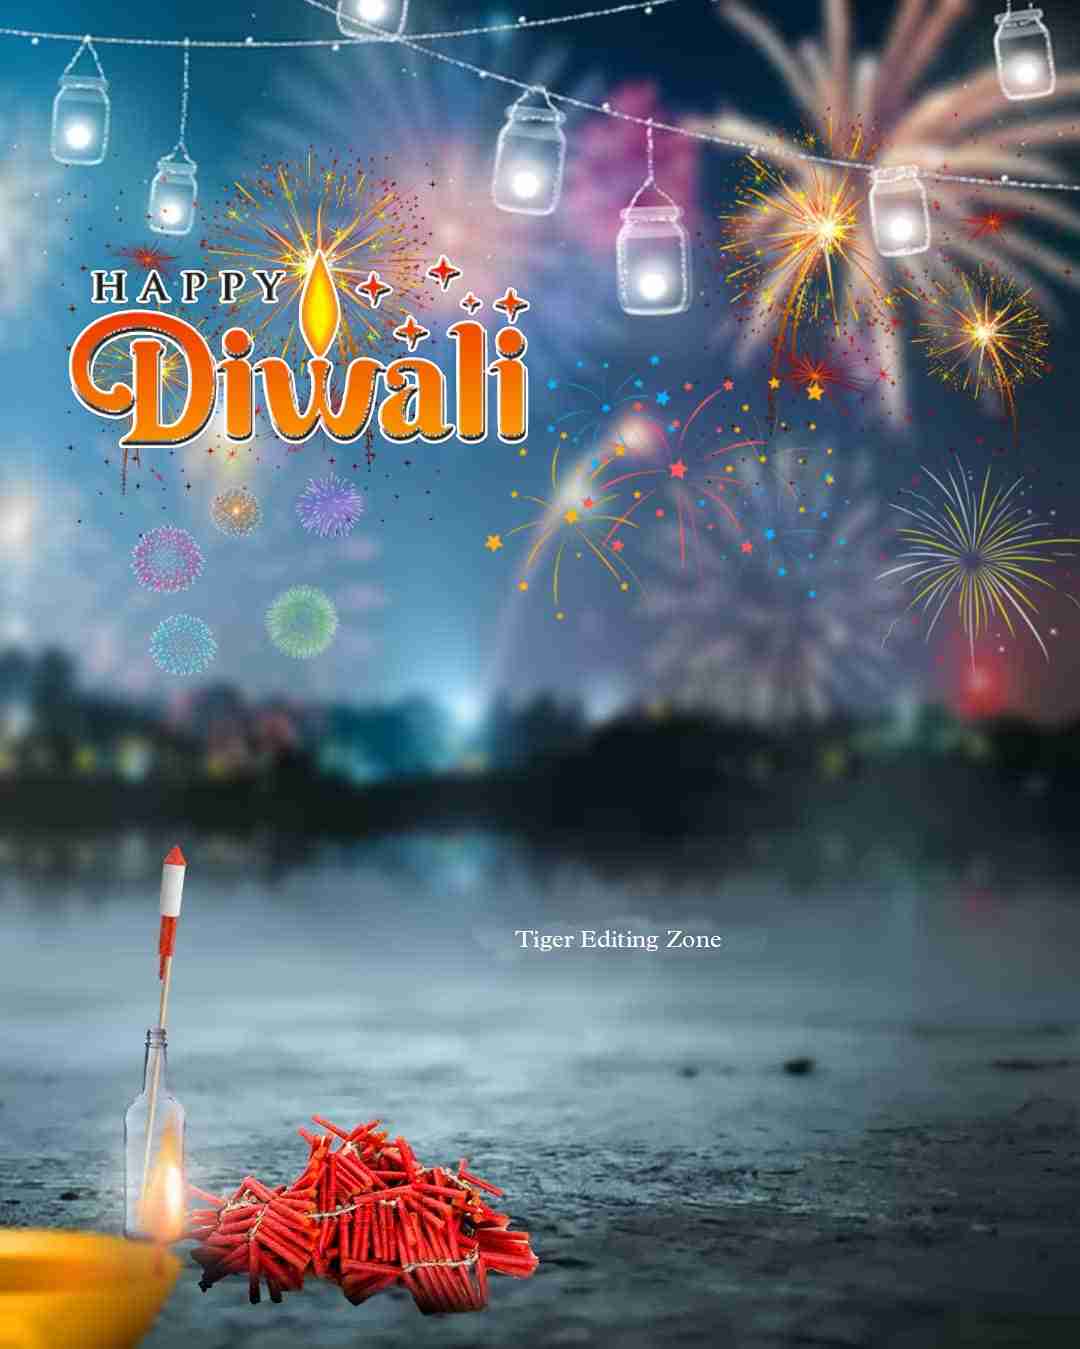 Diwali background images hd